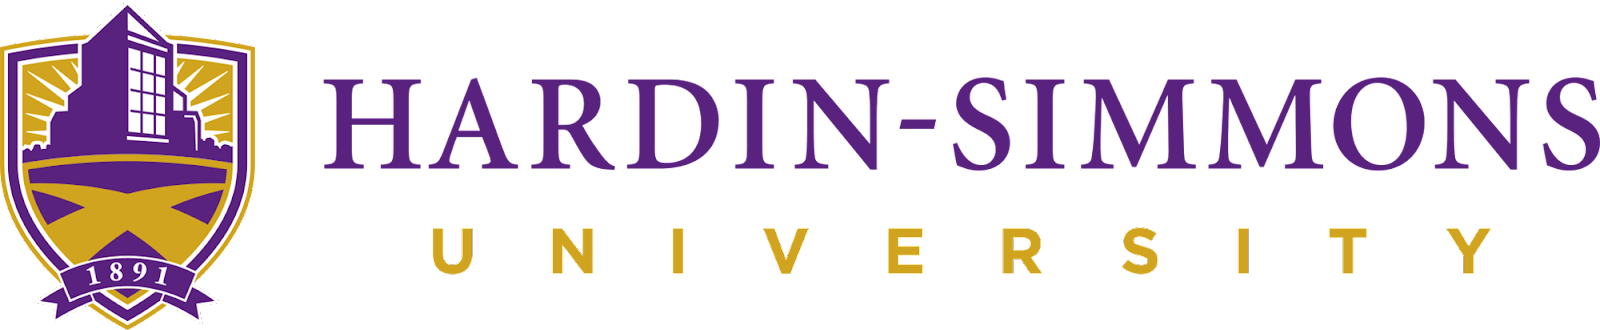 hardin-simmons-logo